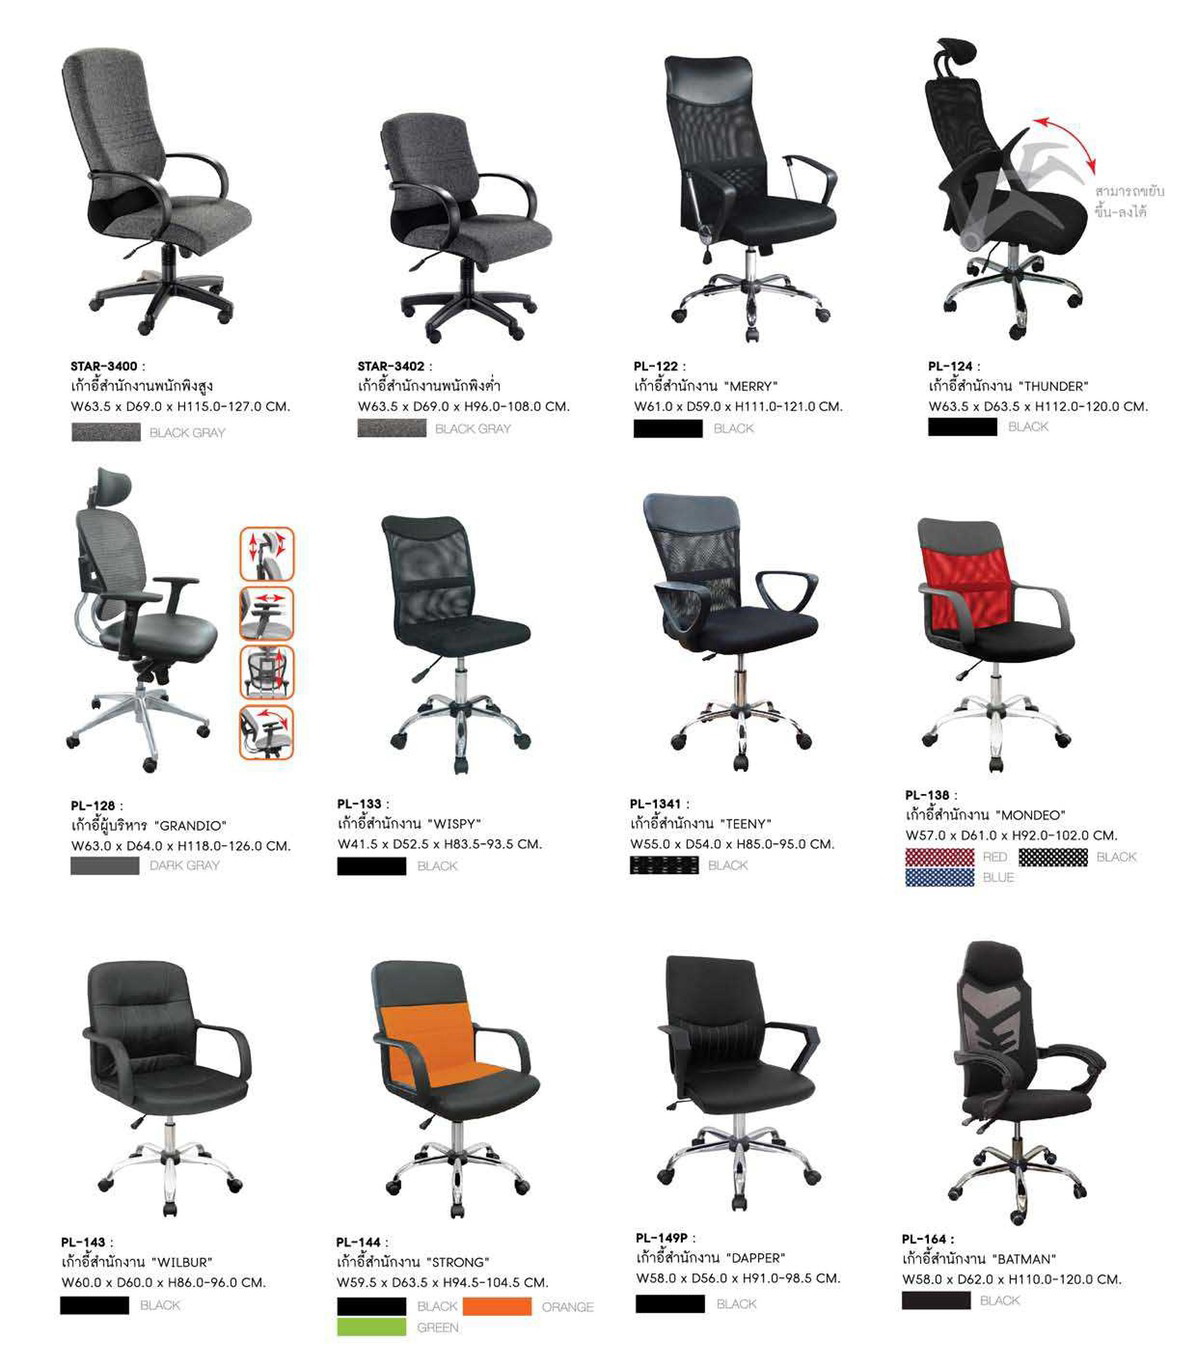 12069::PL-149P:: เก้าอี้สำนักงาน DAPPER ขนาด W 580 X D 560 X H 910-980.50 MM. สีดำ , สีเทา  เก้าอี้สำนักงาน ชัวร์